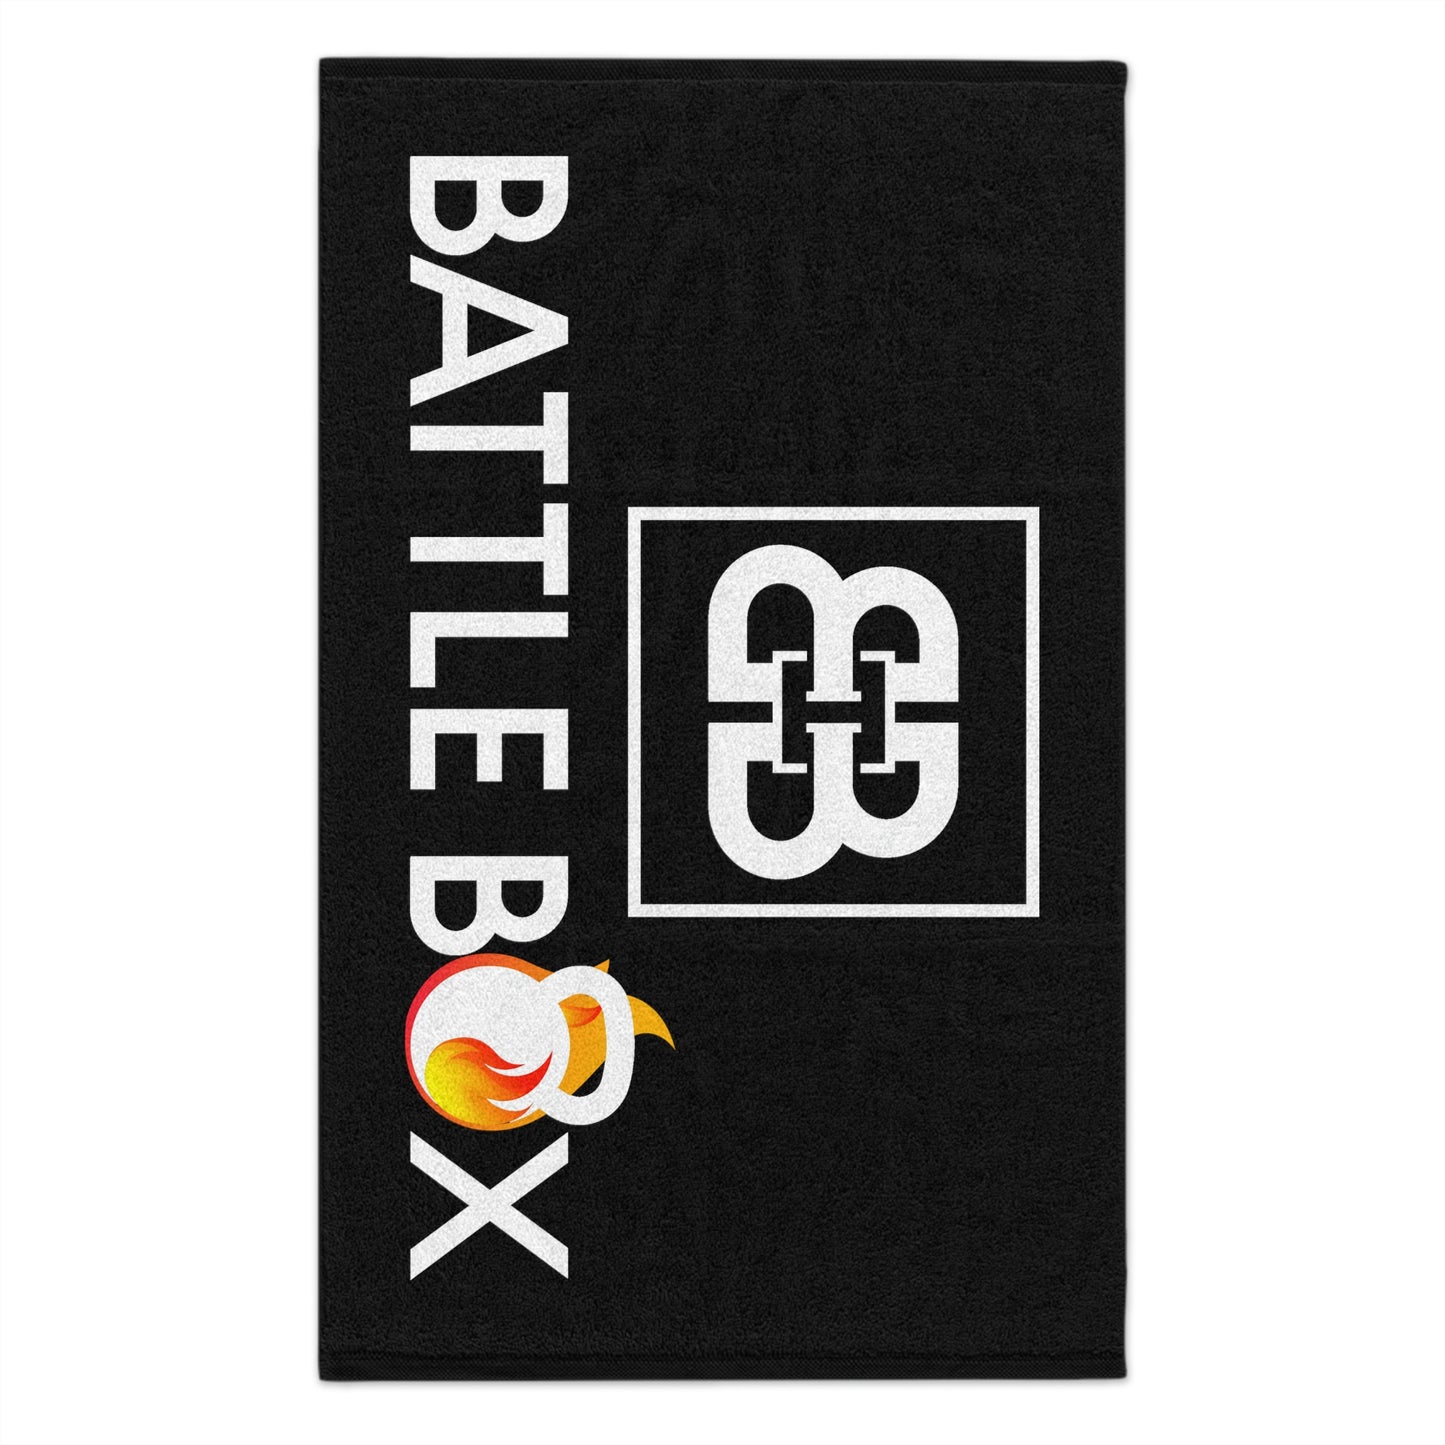 Battle Box Red Rally Towel-Black